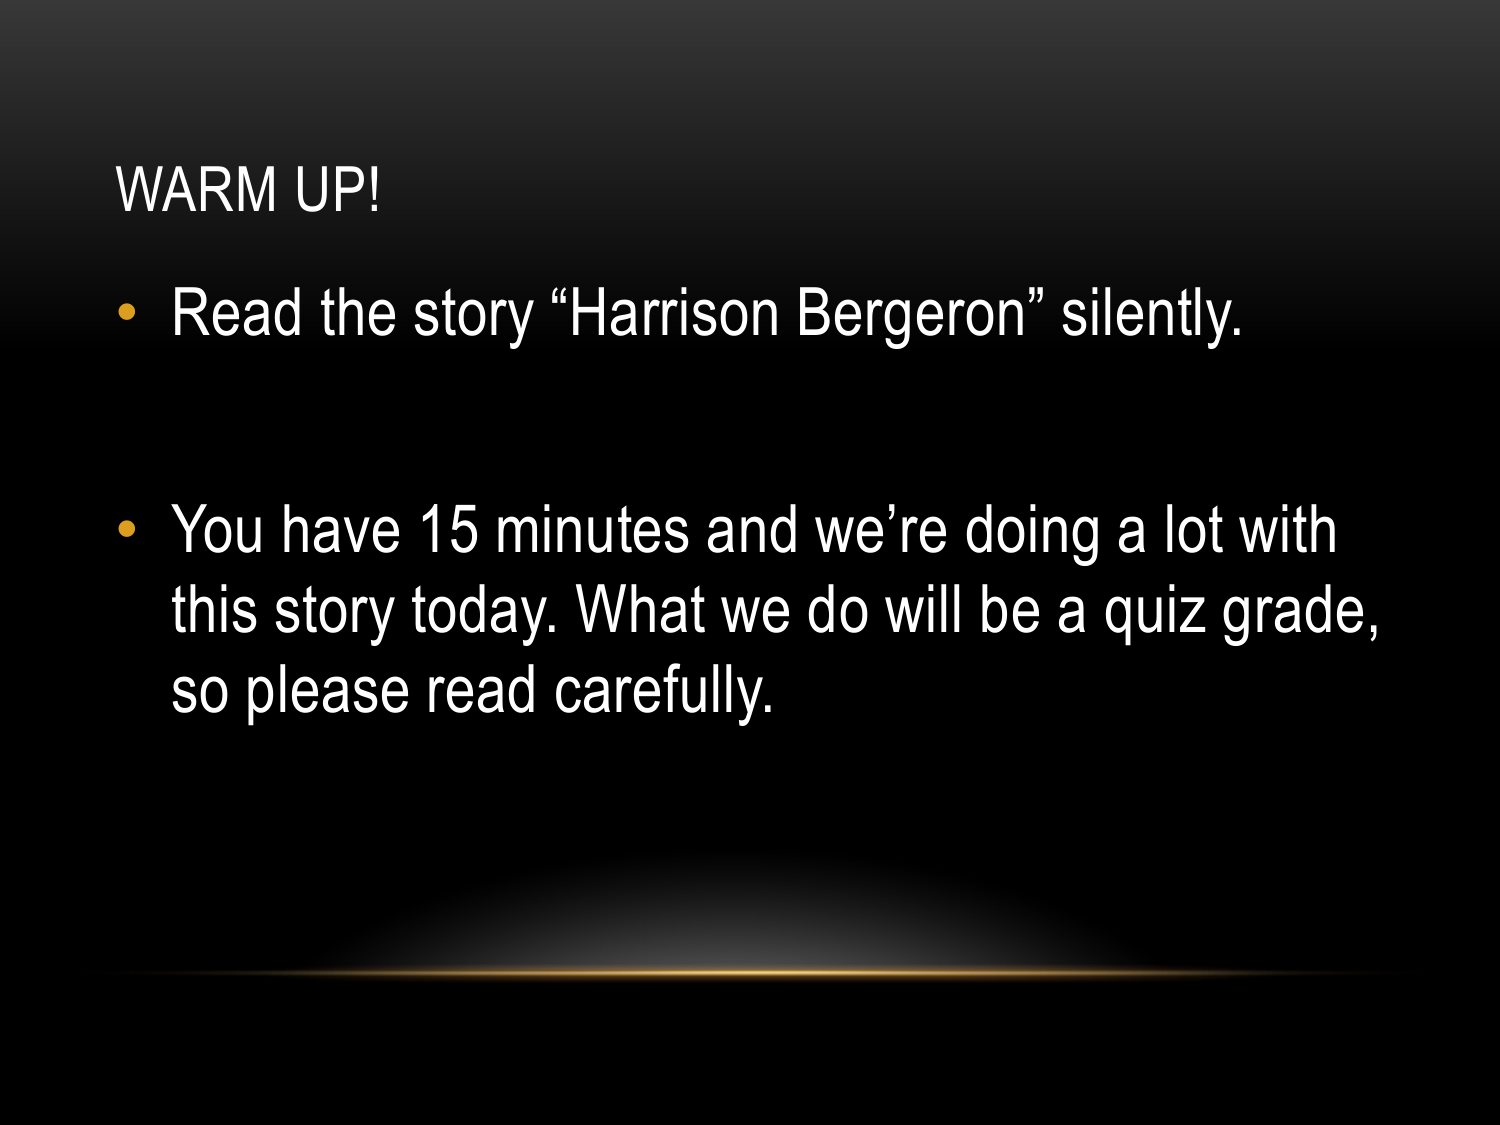 Harrison Bergeron Quote Analysis